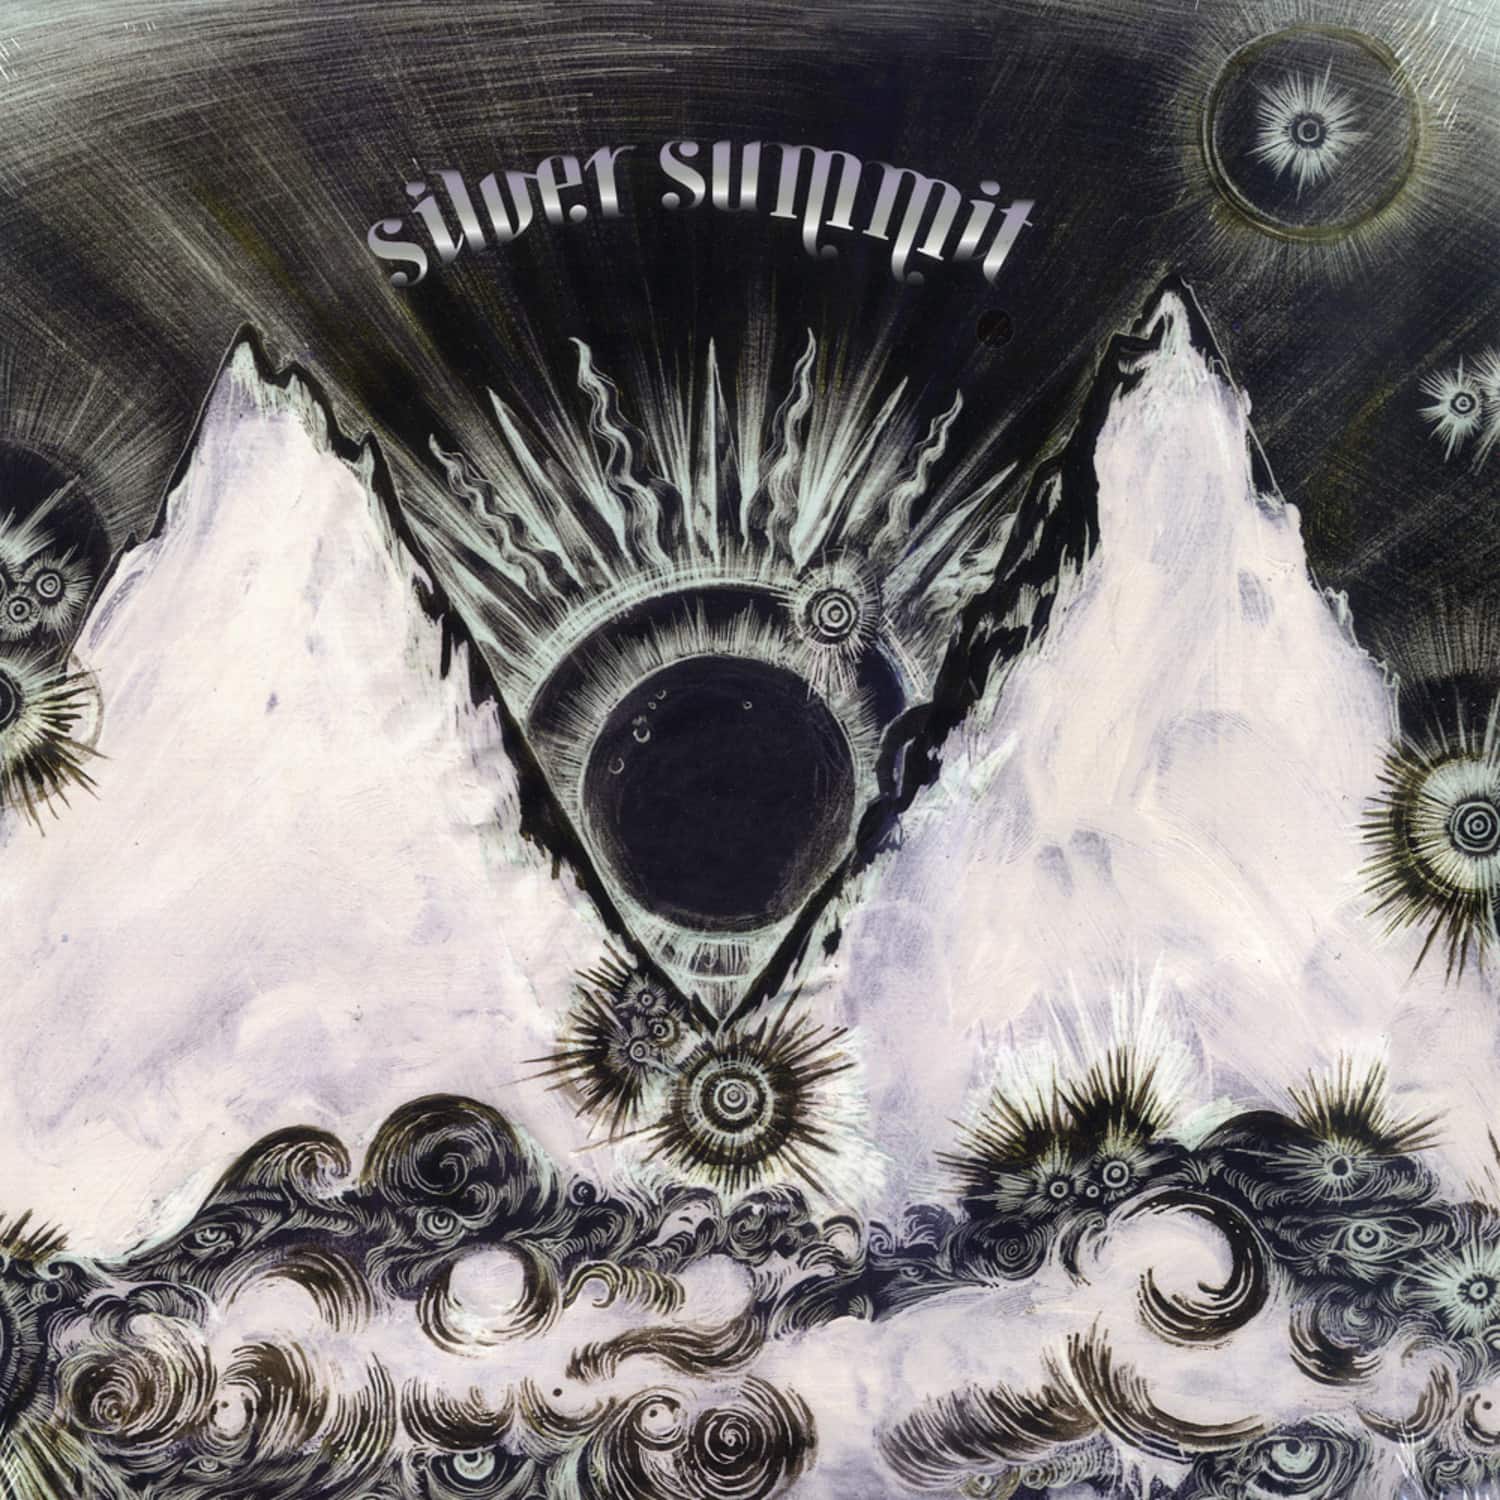 Silver Summit - SILVER SUMMIT 